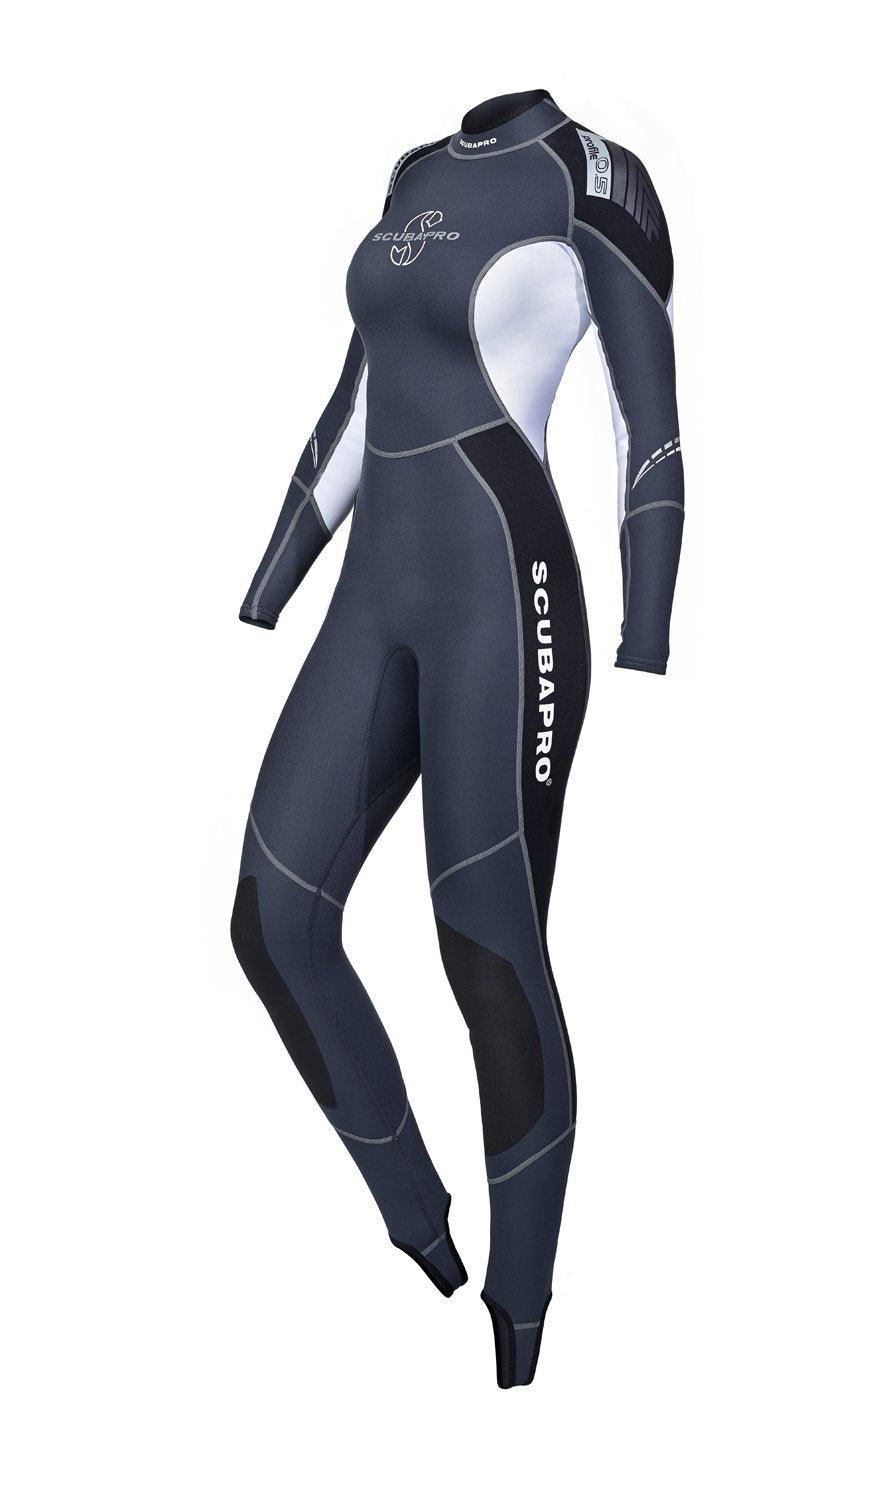 Scubapro Profile Steamer Wetsuit 0.5 mm Women's - Black/Gray/White - Scuba Choice